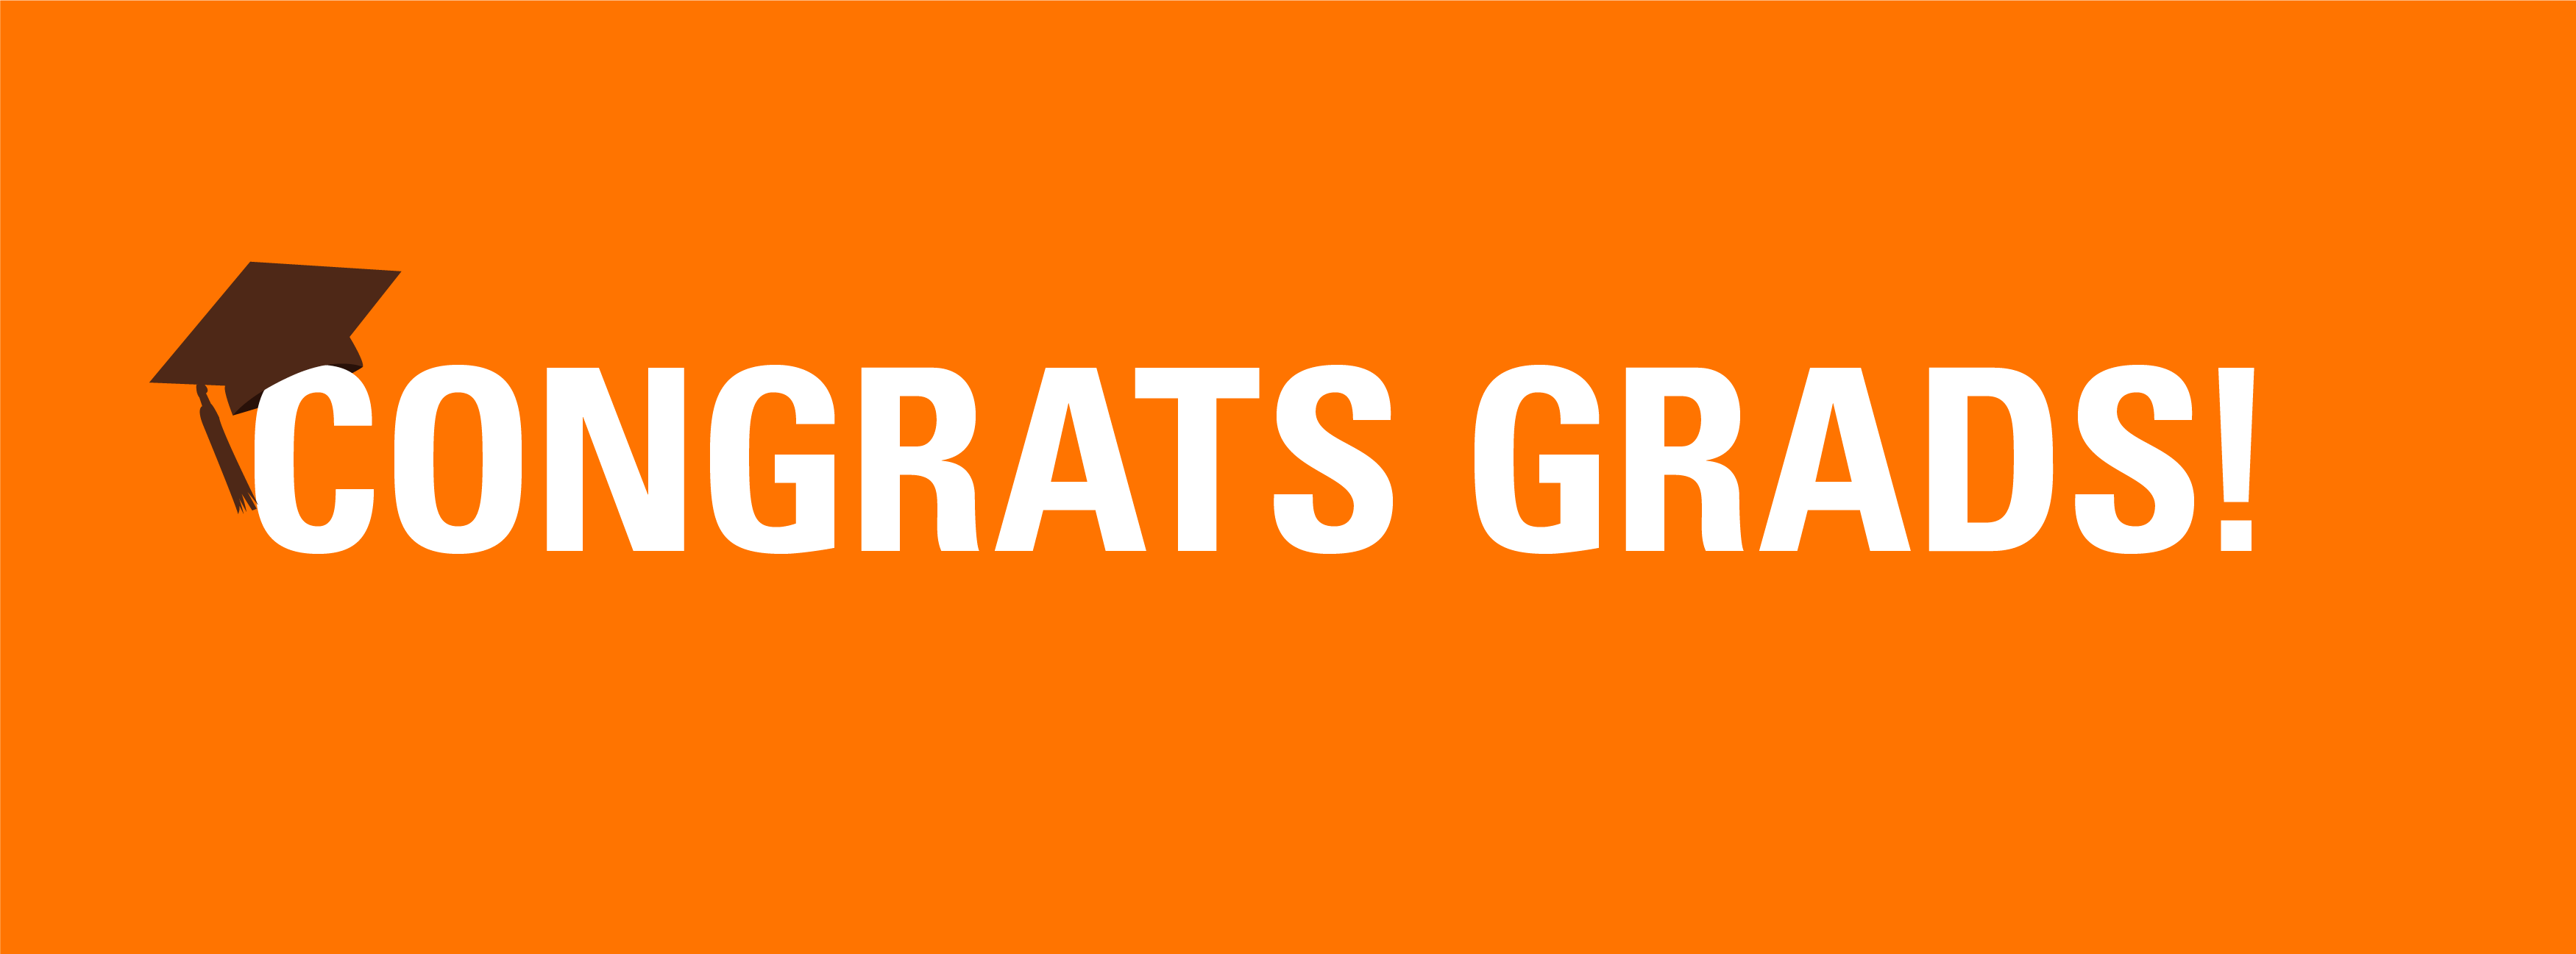 Congrats-Grad-Orange